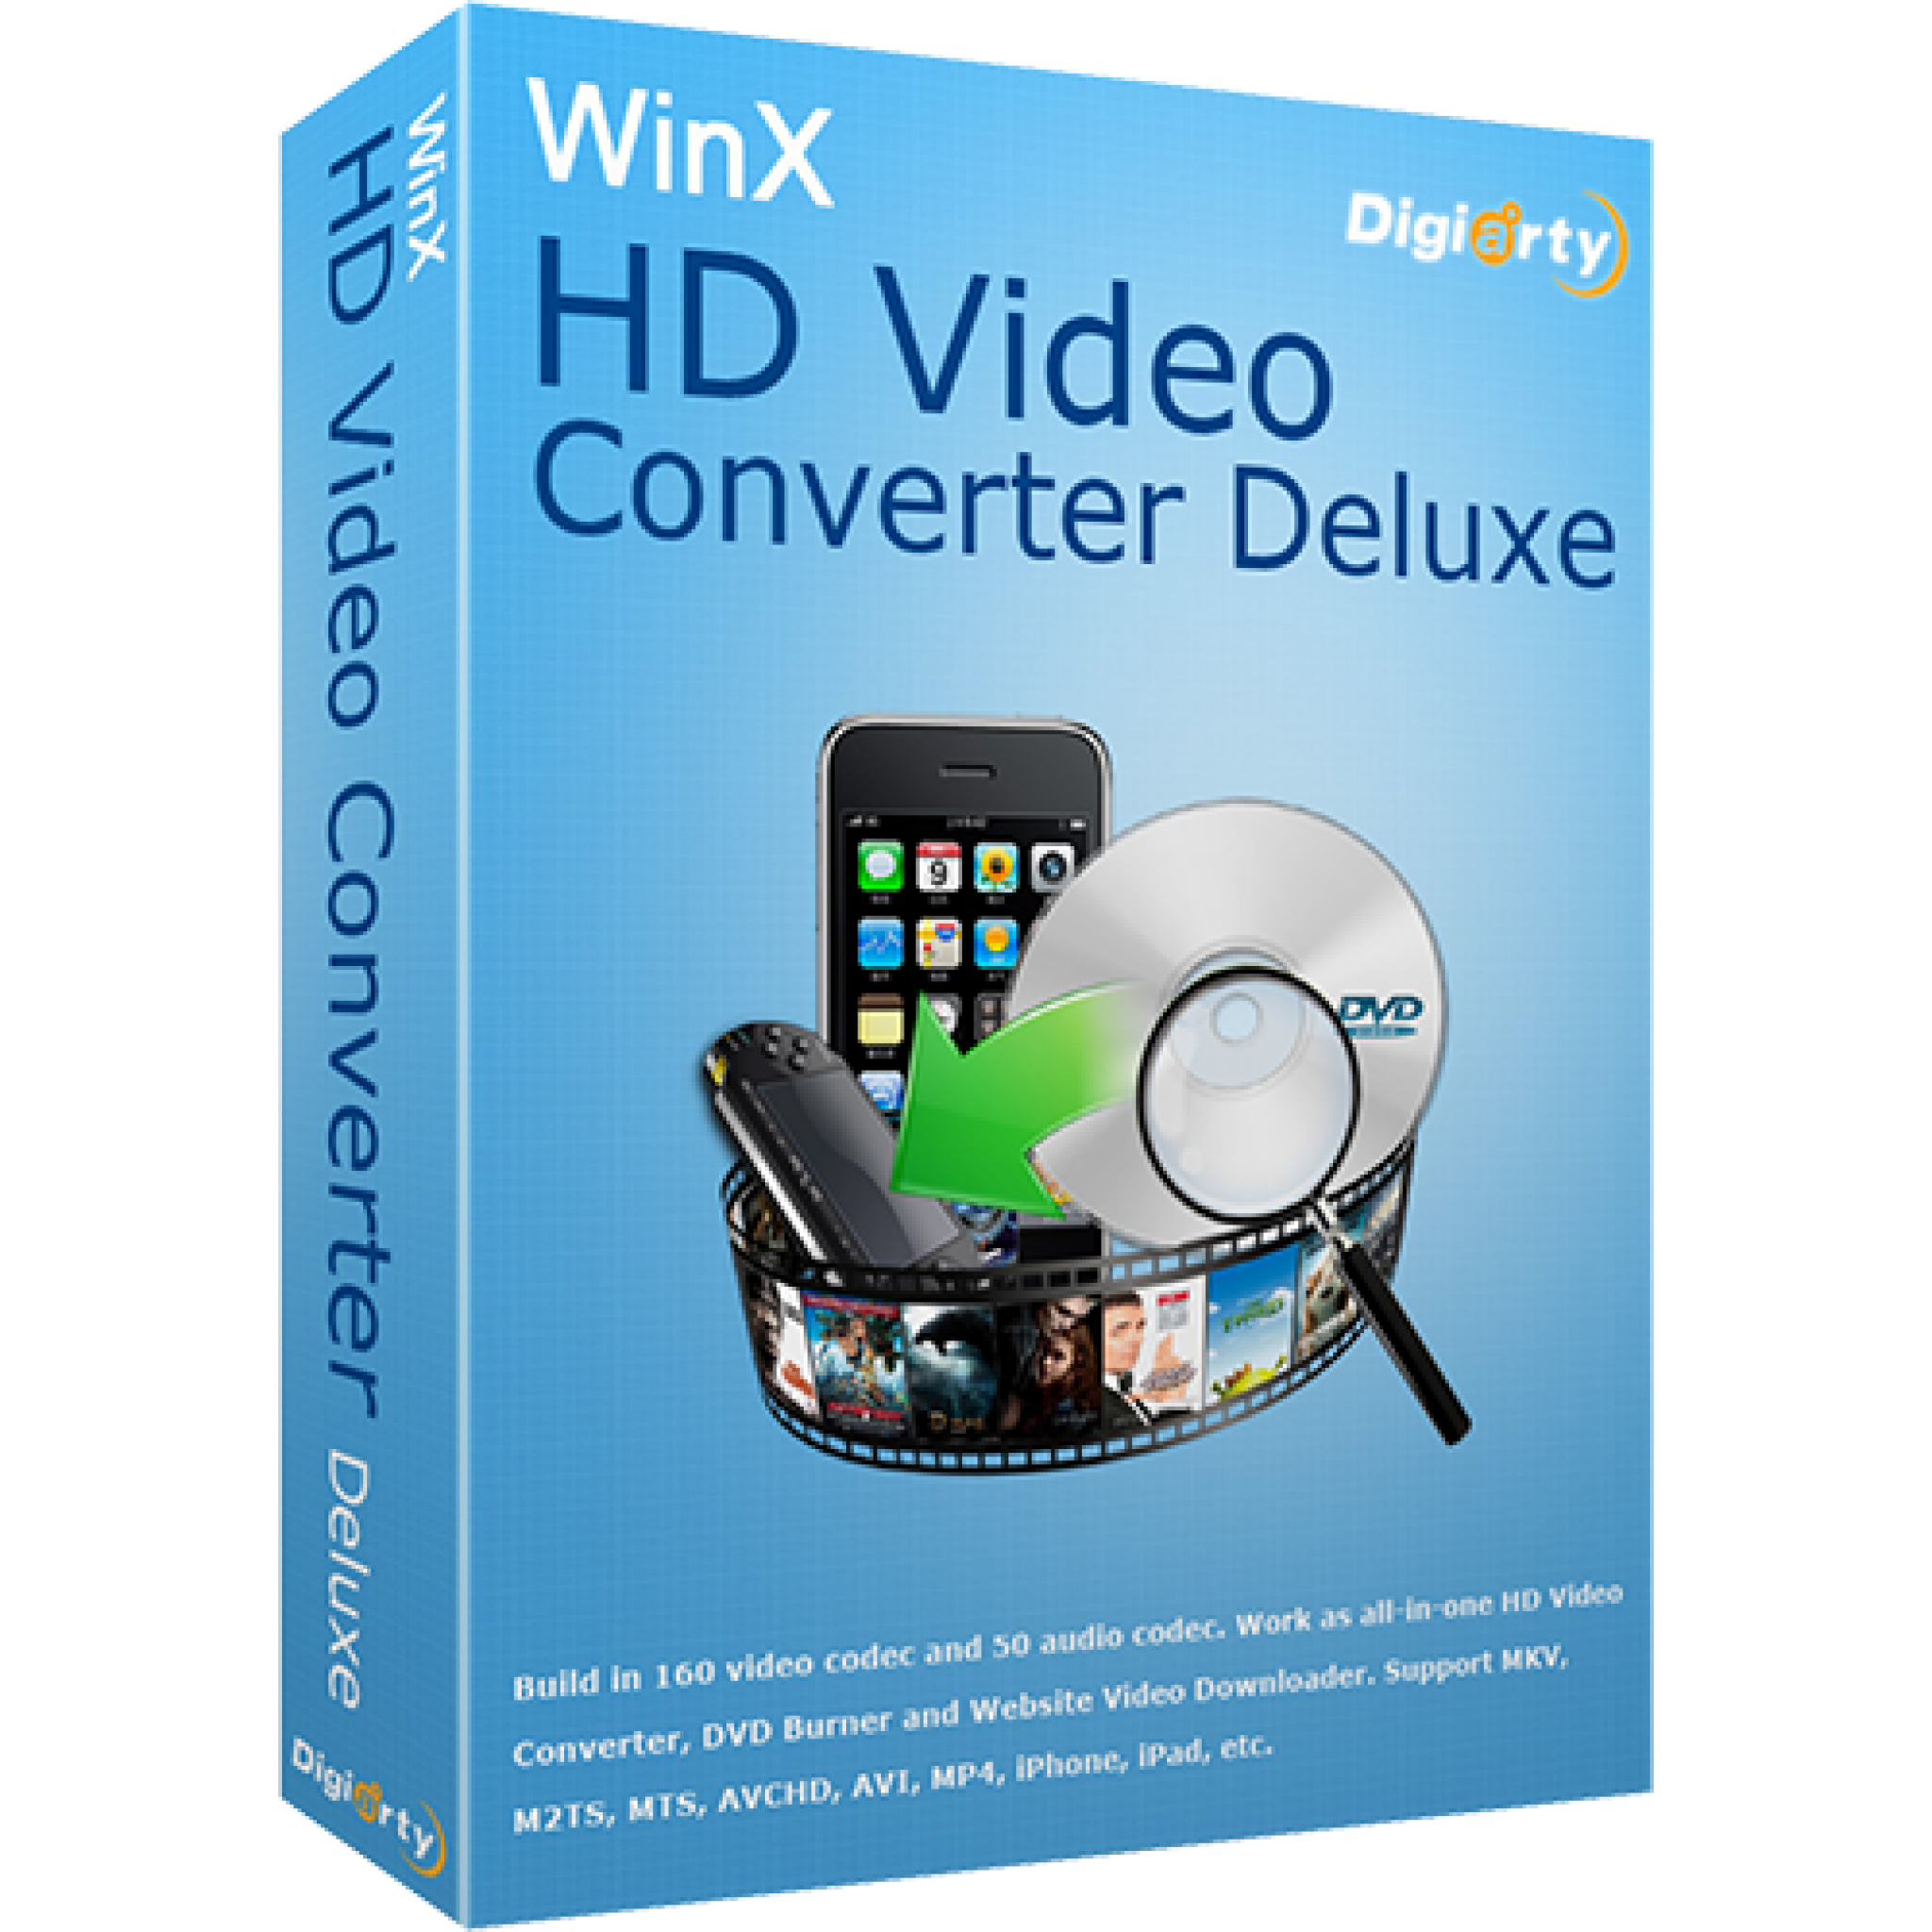 winx hd video converter deluxe serial key